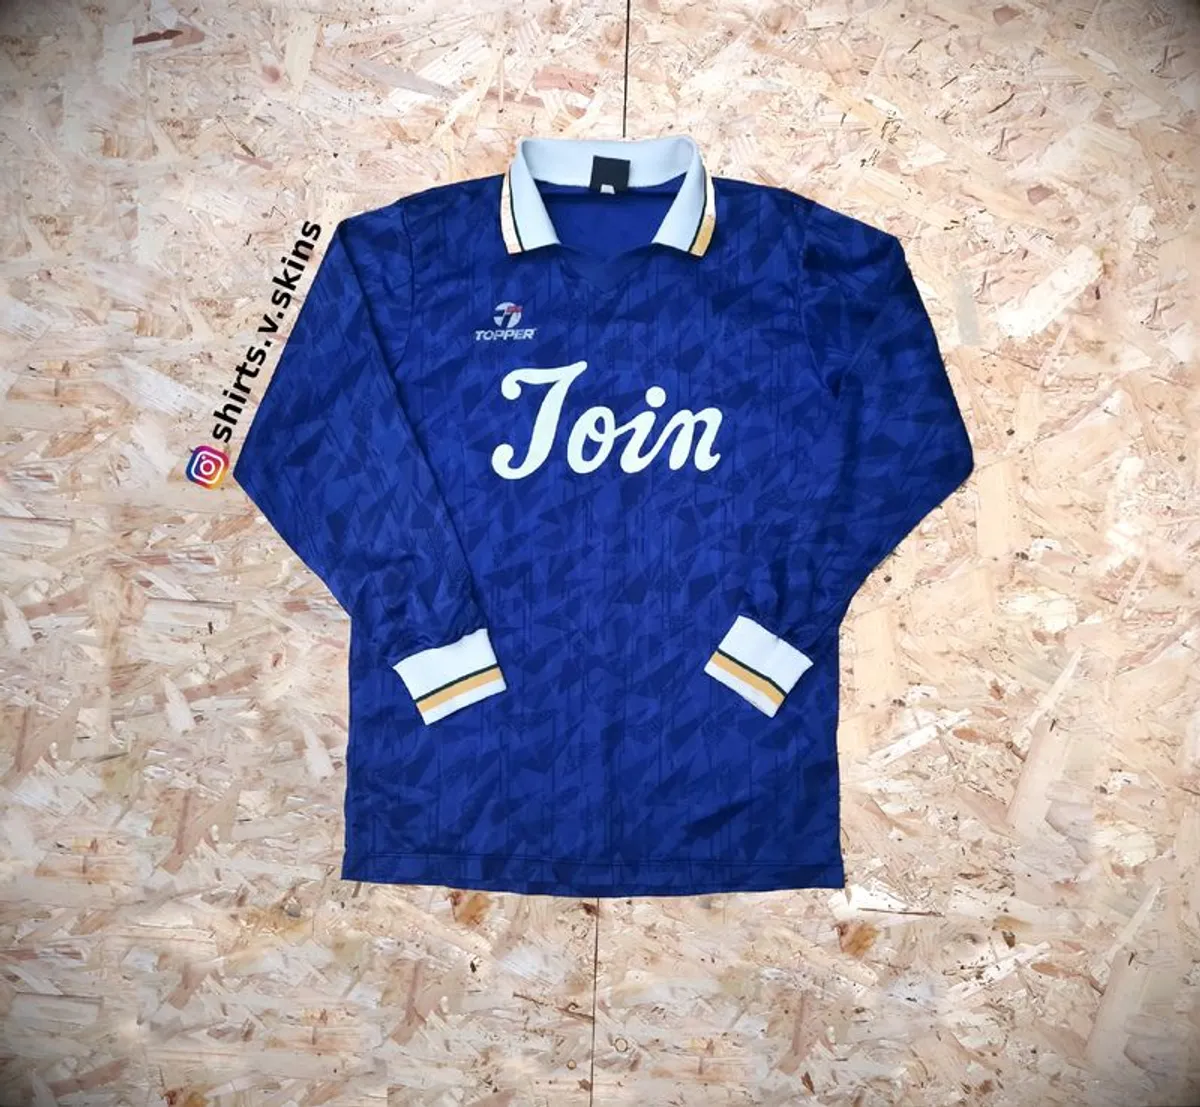 FREE POST Vintage Topper Football SHirt  1990s Retro  Jersey Shirt Soccer Football  Festival Oldschool Blue - Image 1